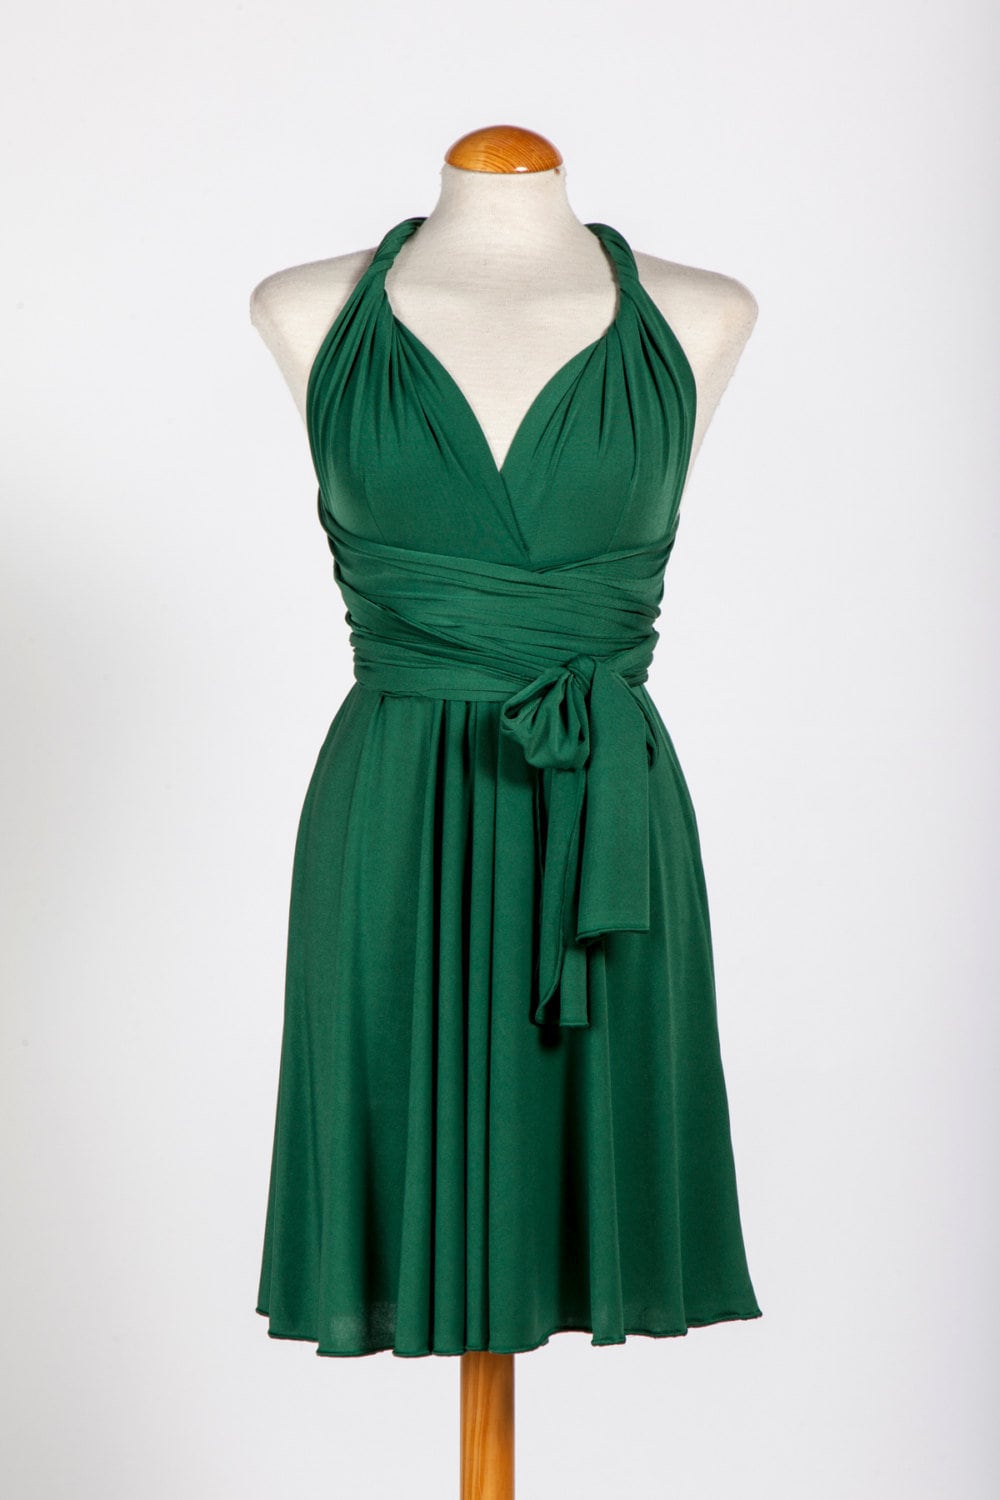 Green Dress Short Bridesmaid Dress ...